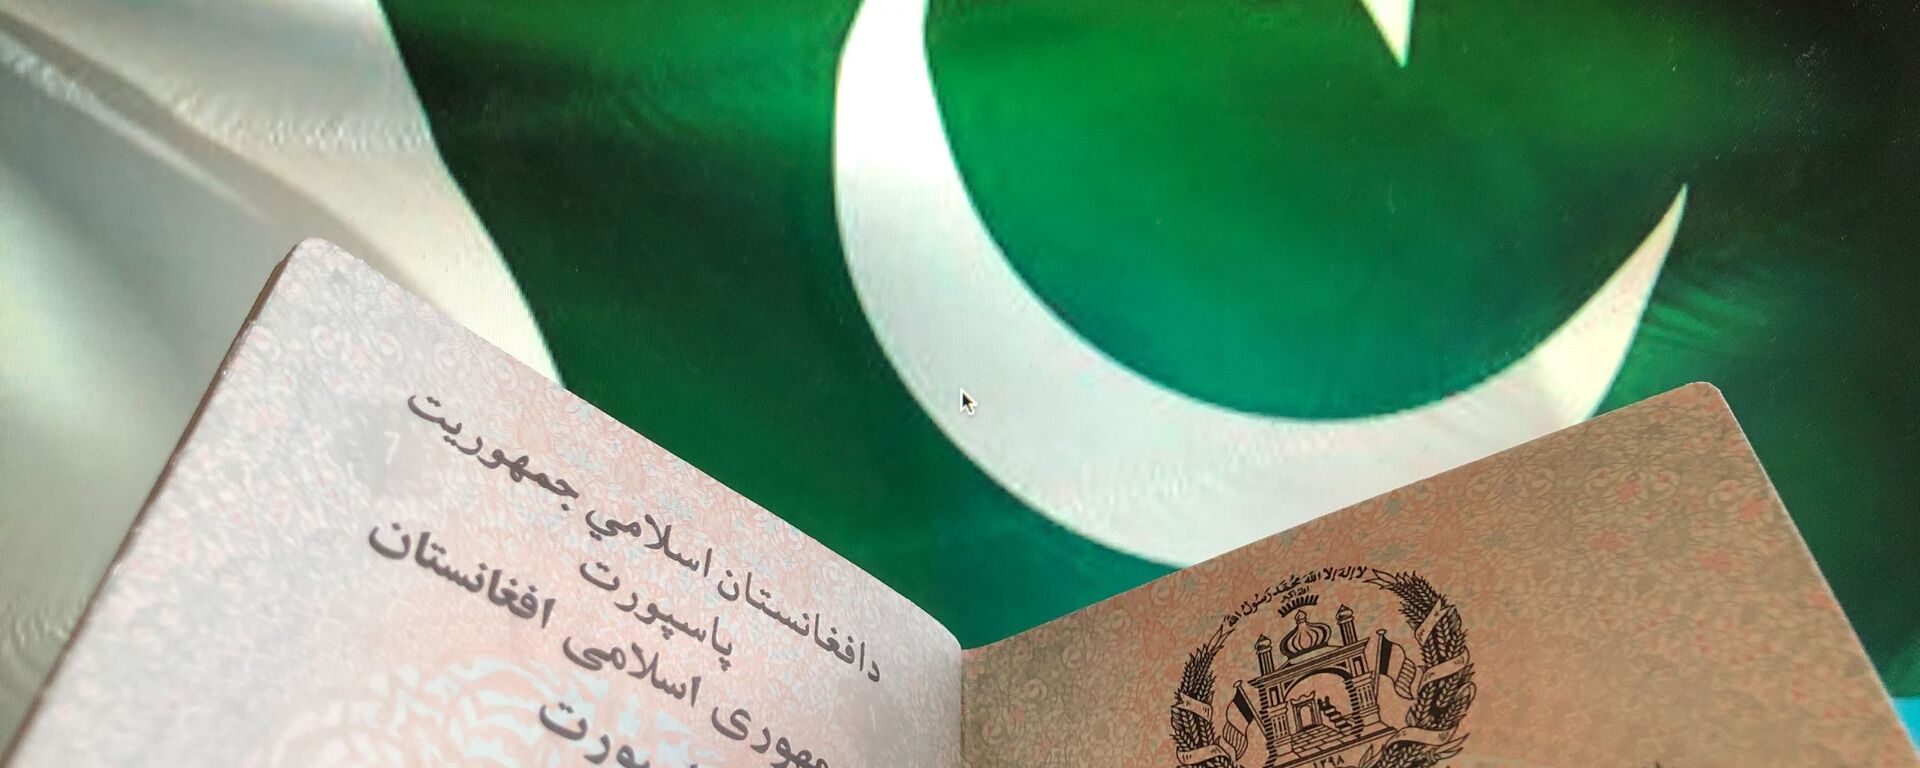 پاسپورت افغانستان و بیرق پاکستان - اسپوتنیک افغانستان  , 1920, 30.10.2019